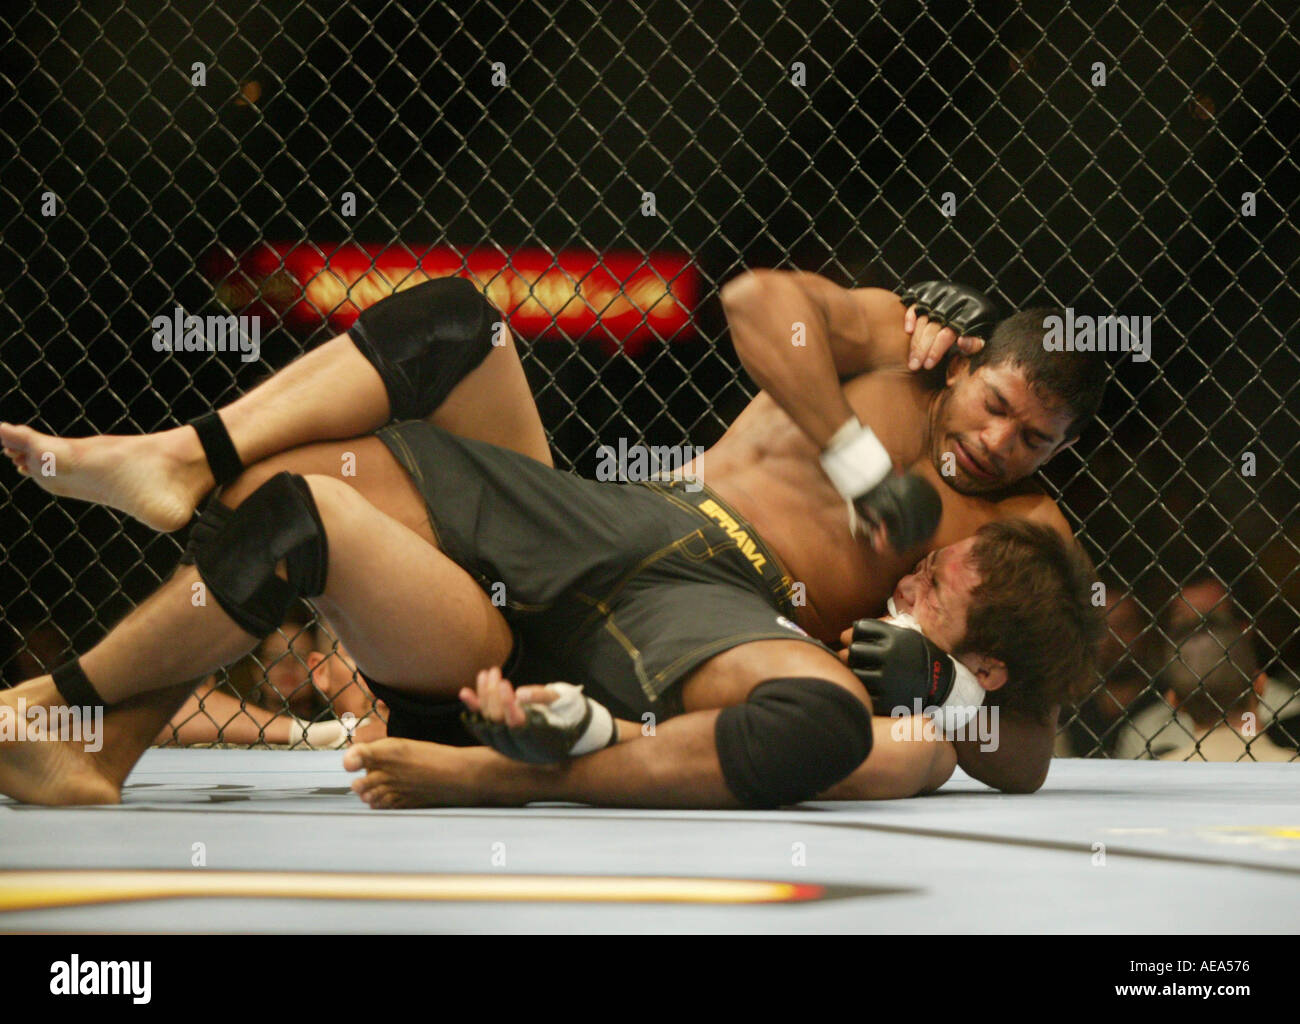 Ultimate Fighting Championship Mandalay Bay Hotel und Casino Nevada USA Bild von Barry Bland 26 9 03 Stockfoto